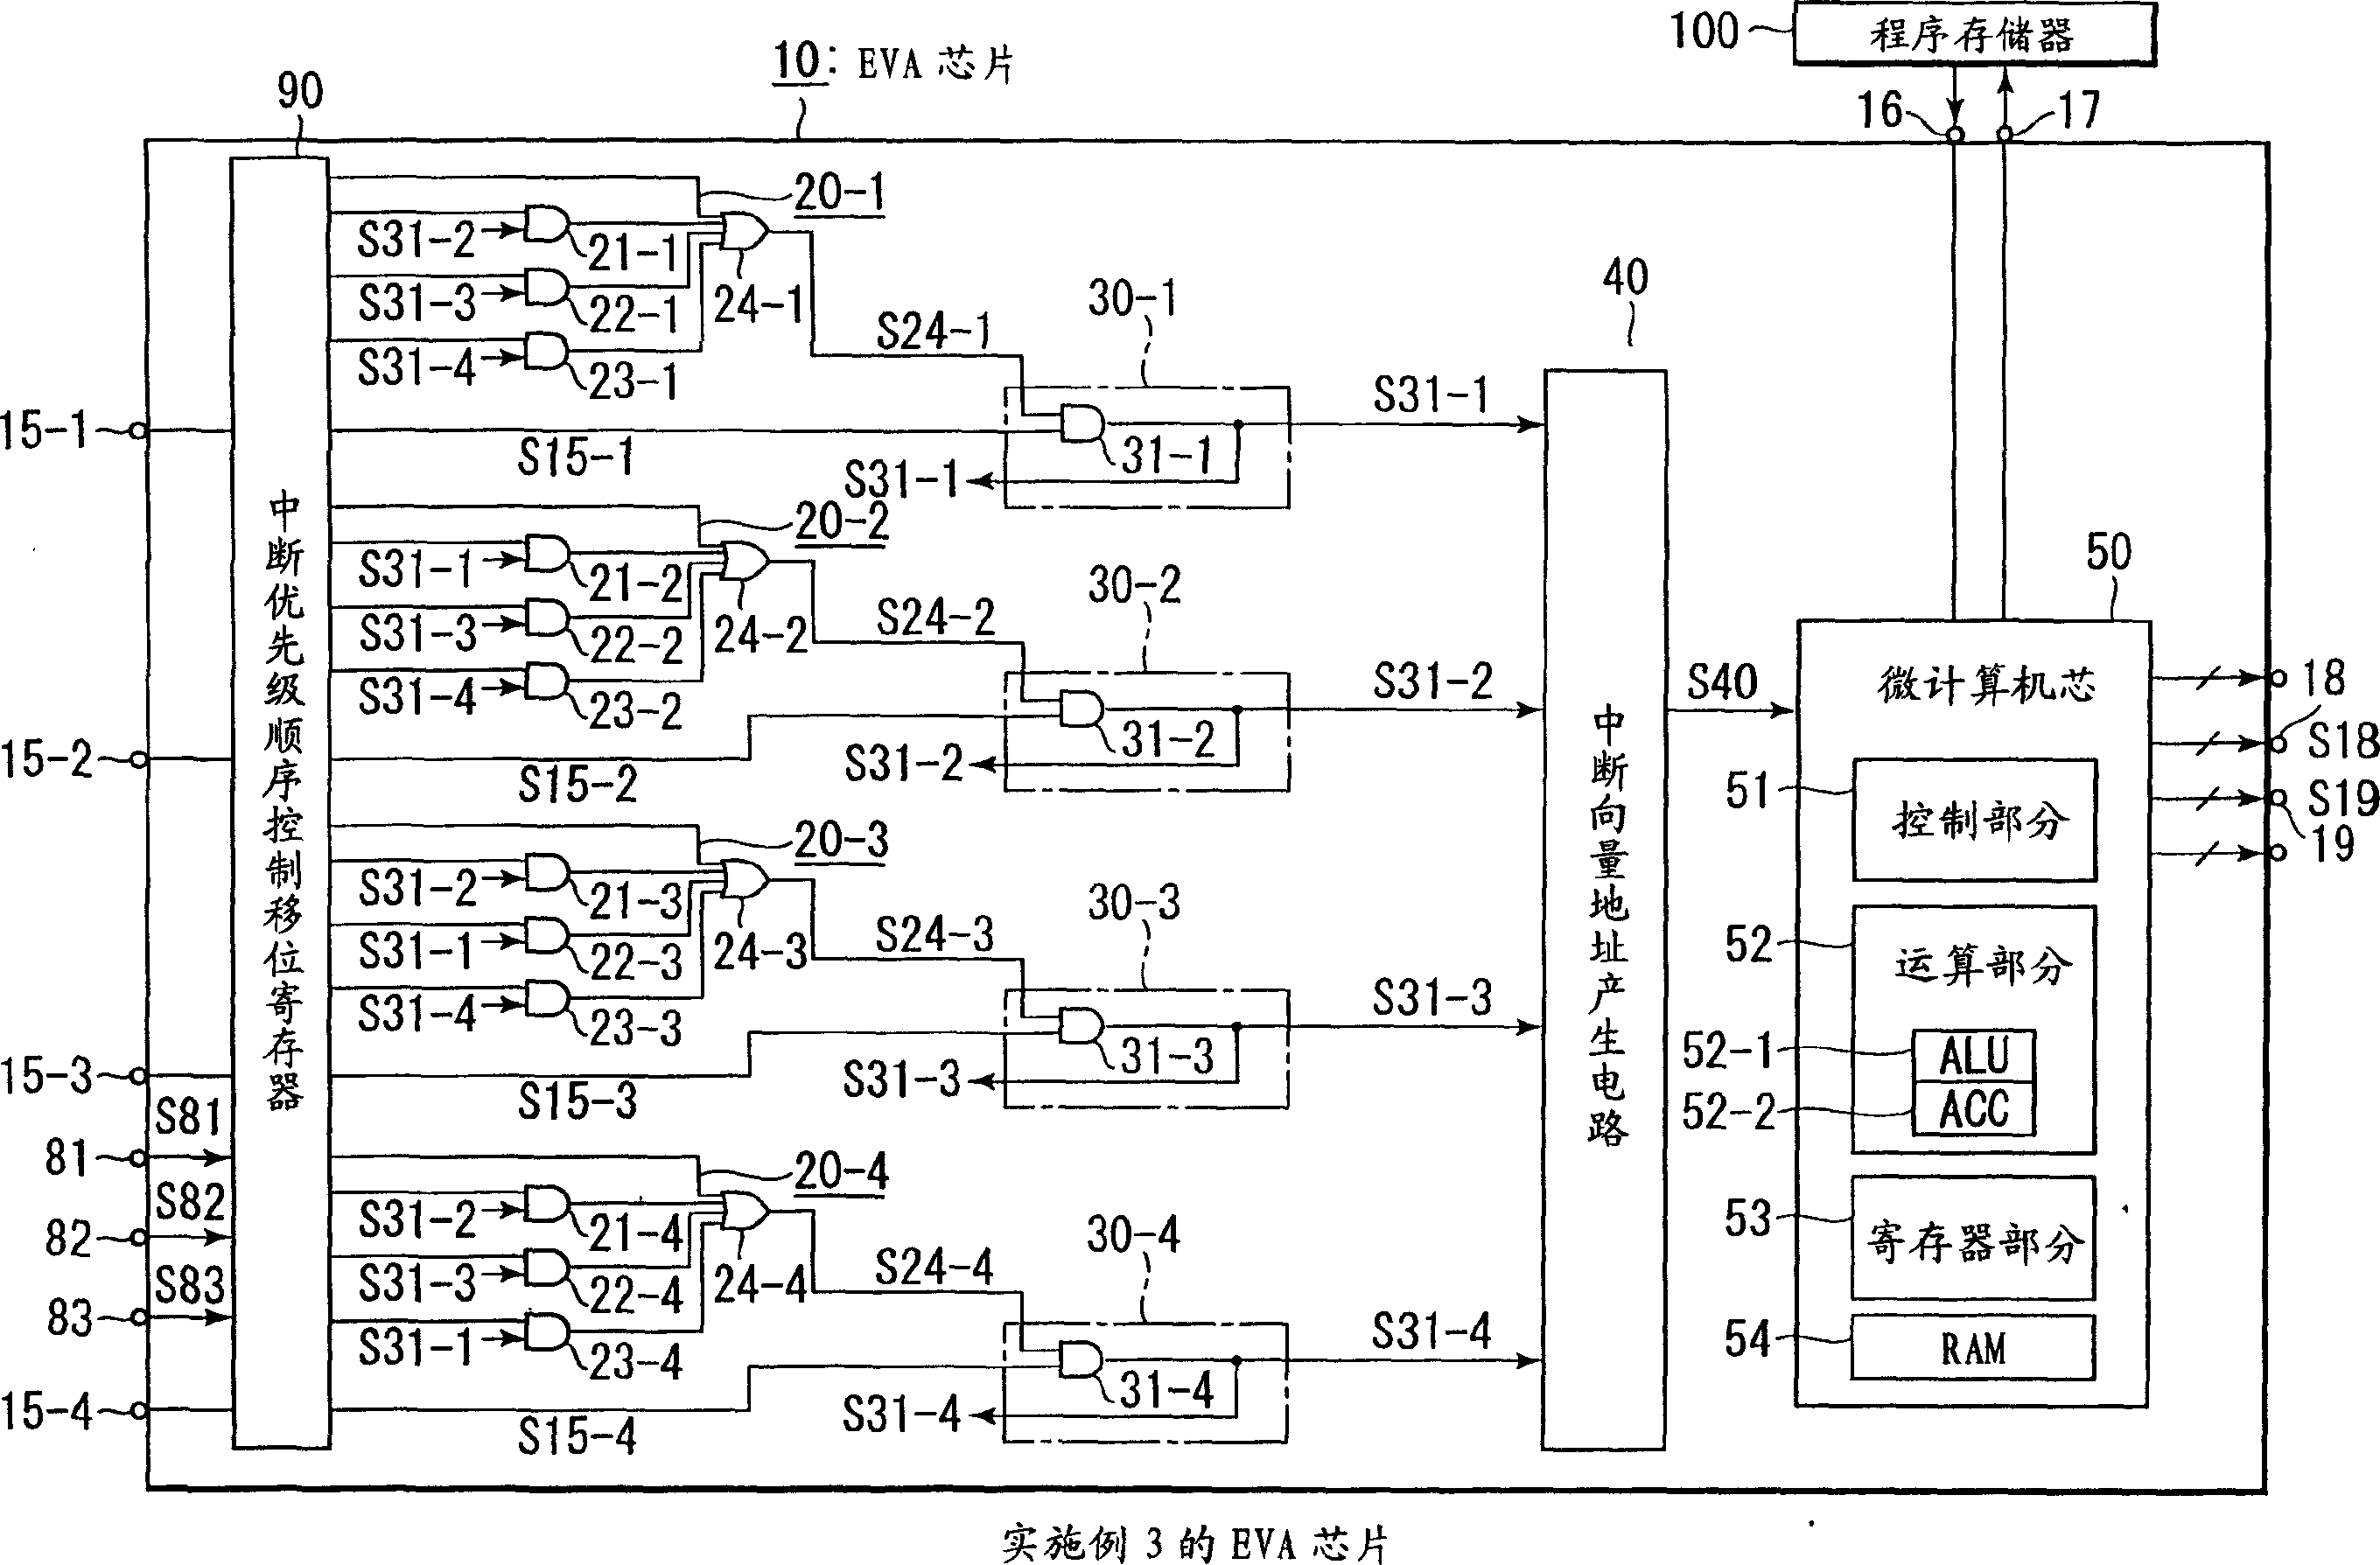 Evaluation chip